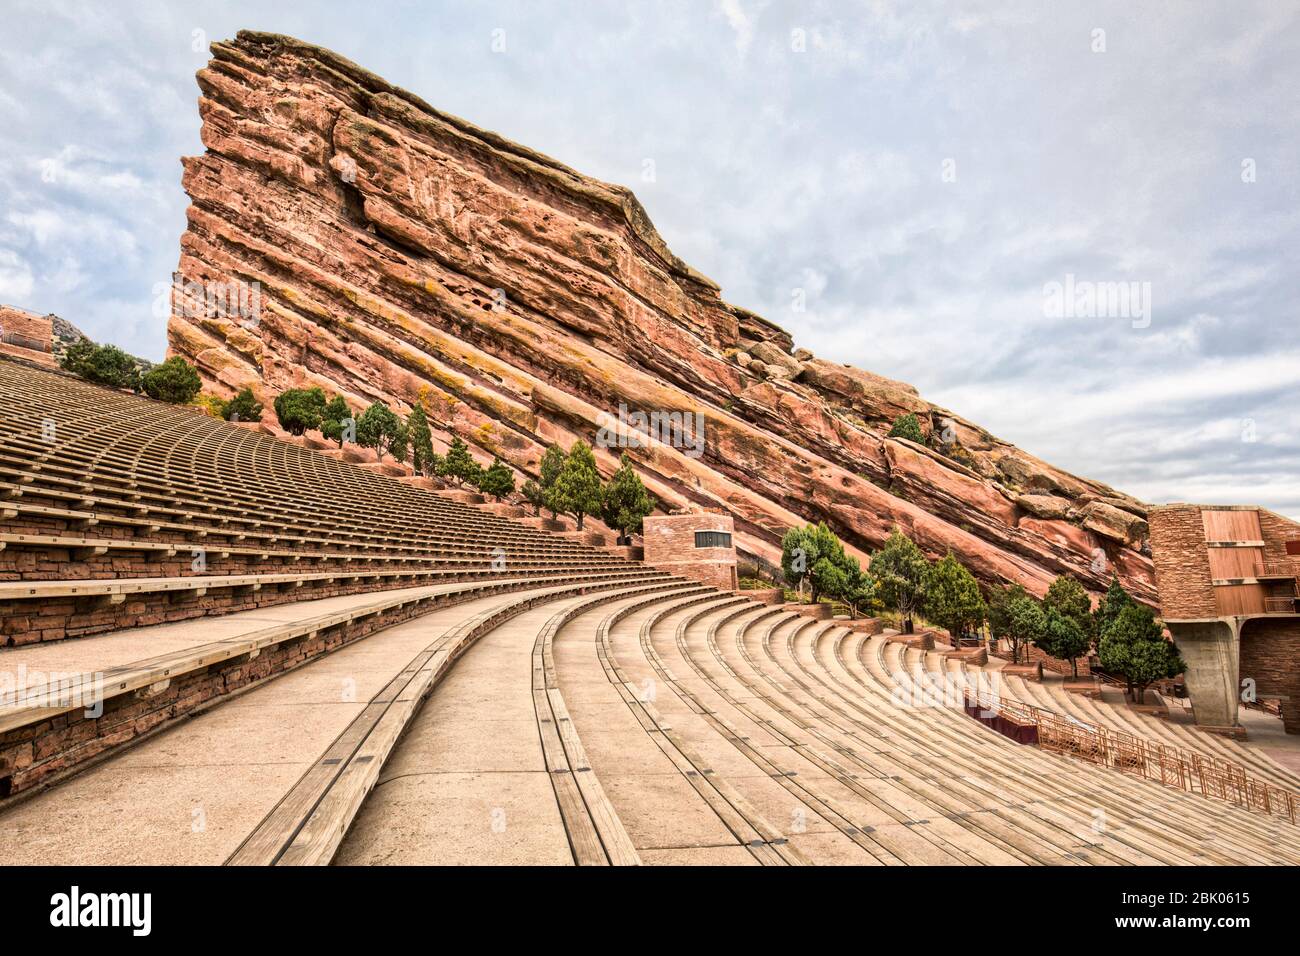 Das berühmte Red Rocks Amphitheater liegt direkt vor Denver, Colorado, USA. Stockfoto